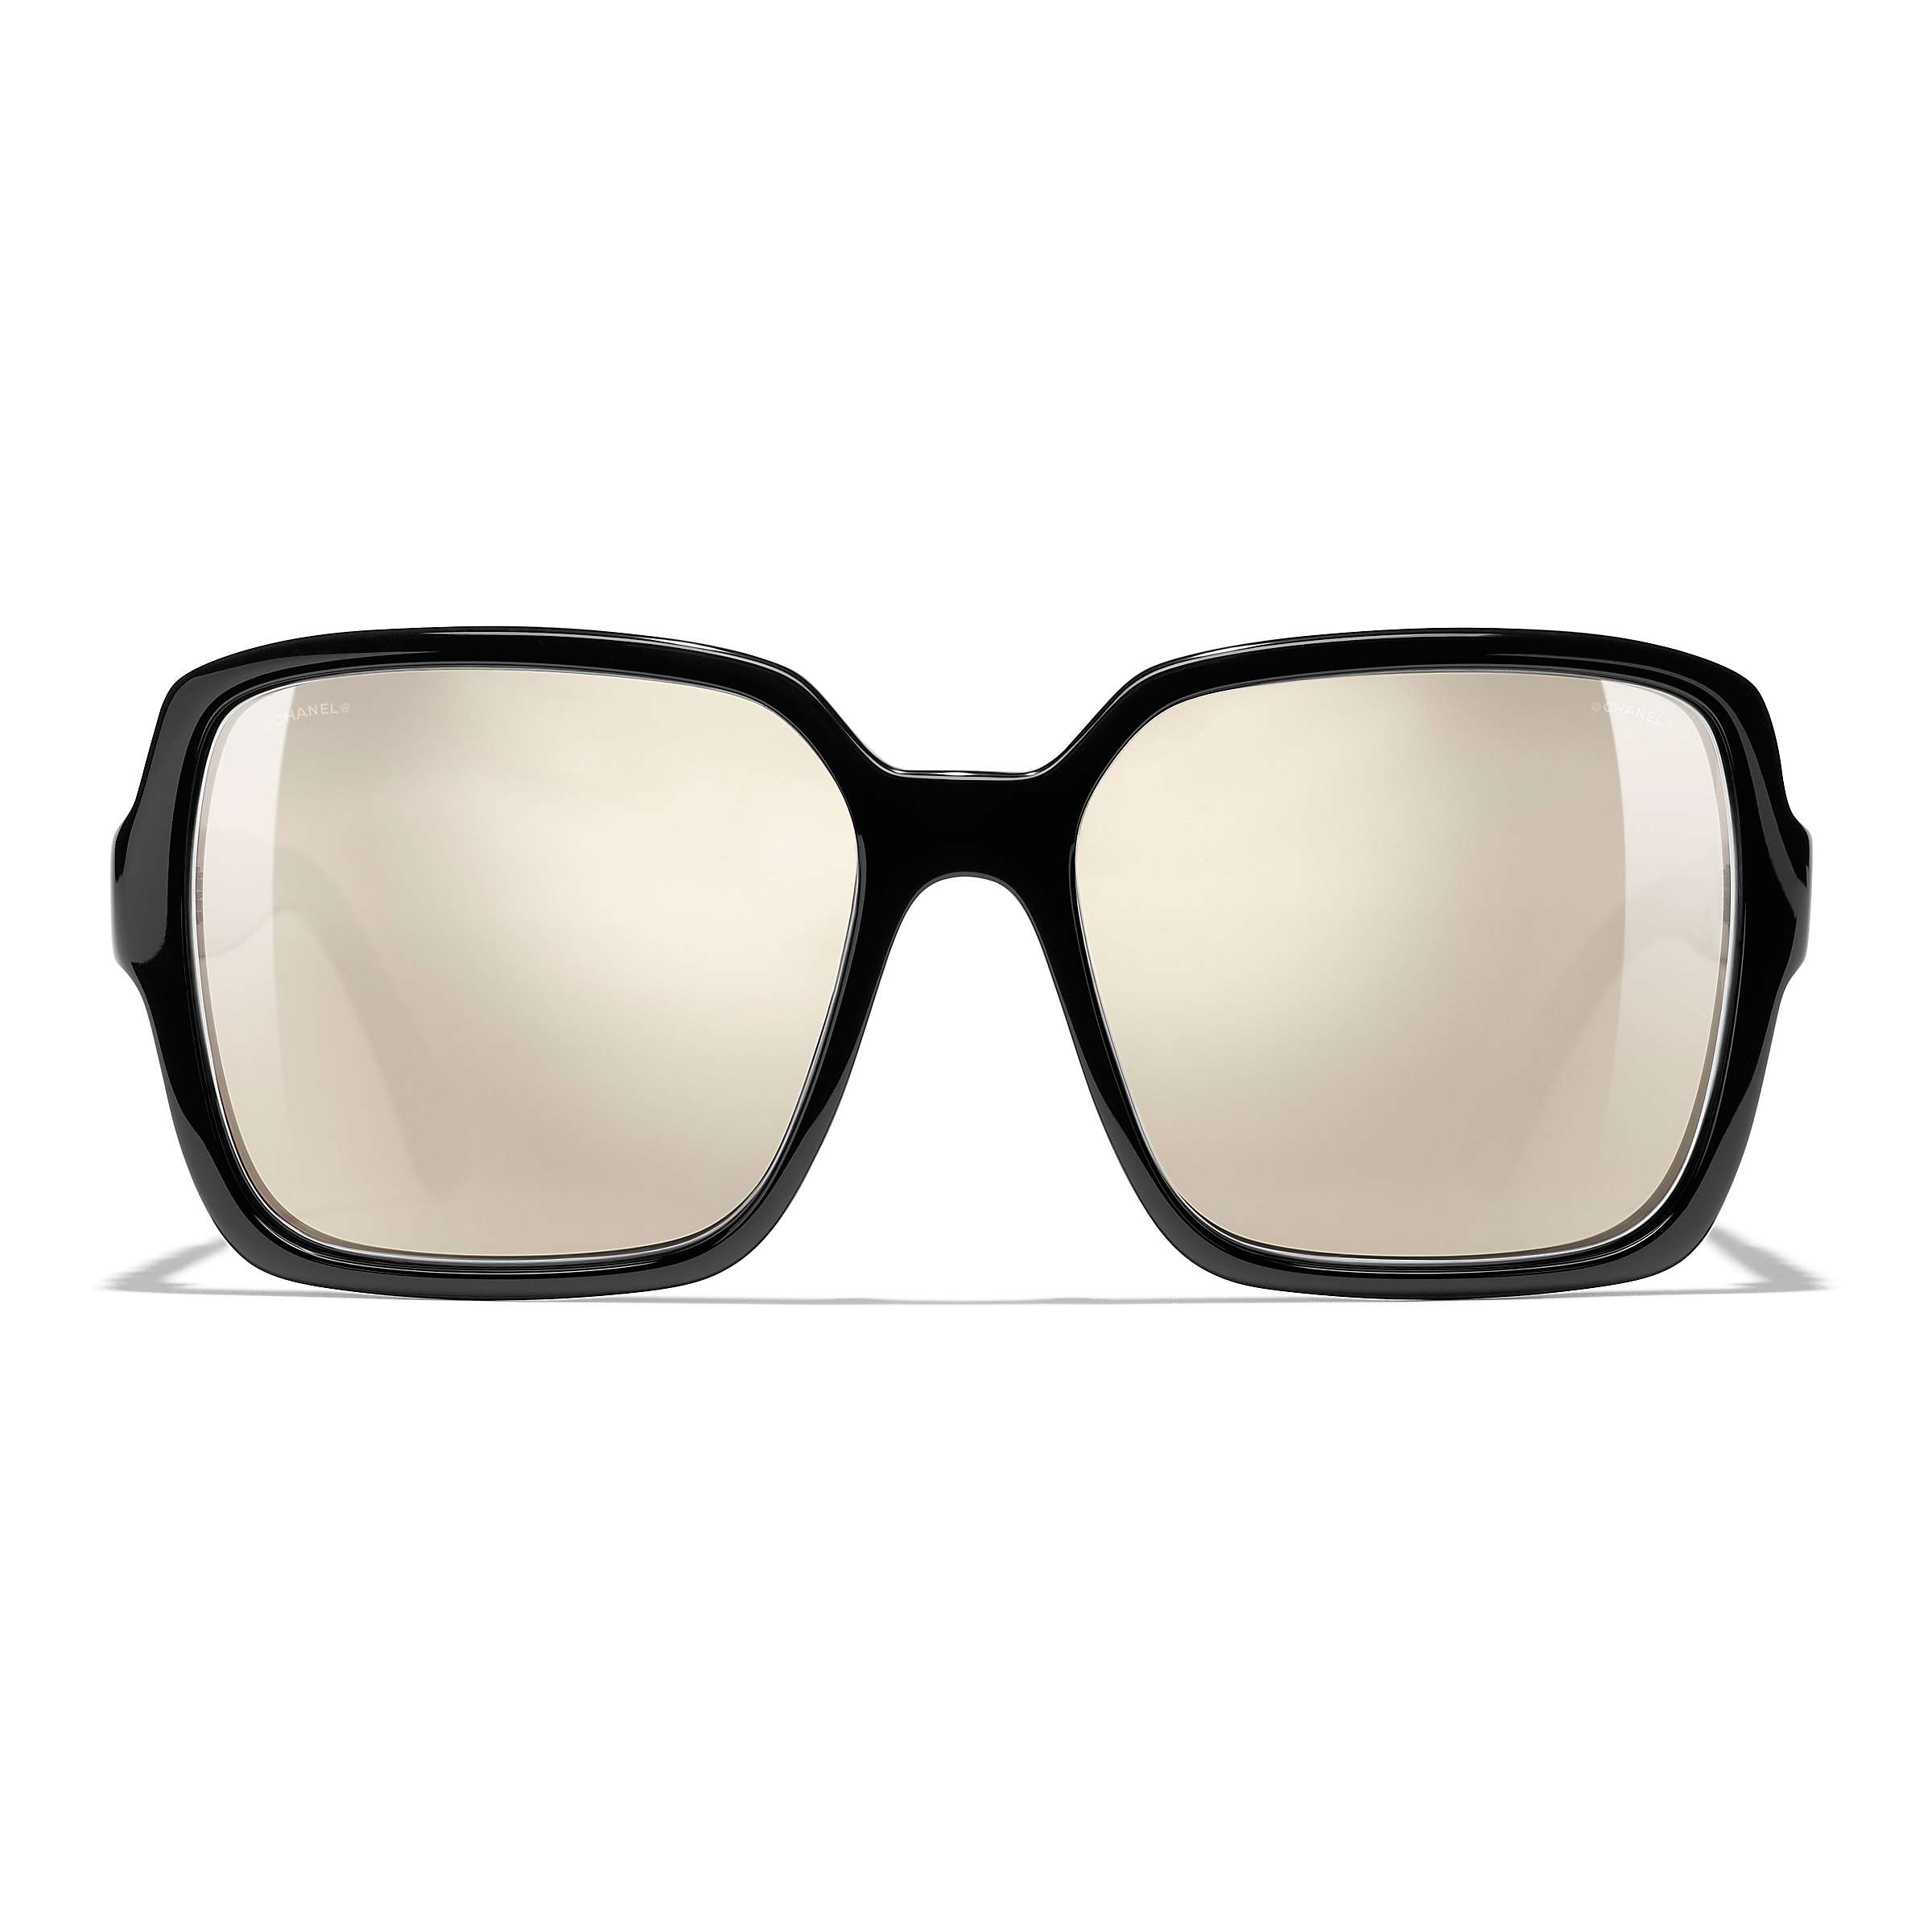 Buy CHANEL Rectangular Sunglasses CH5408 Black/Mirror Gold Online at johnlewis.com